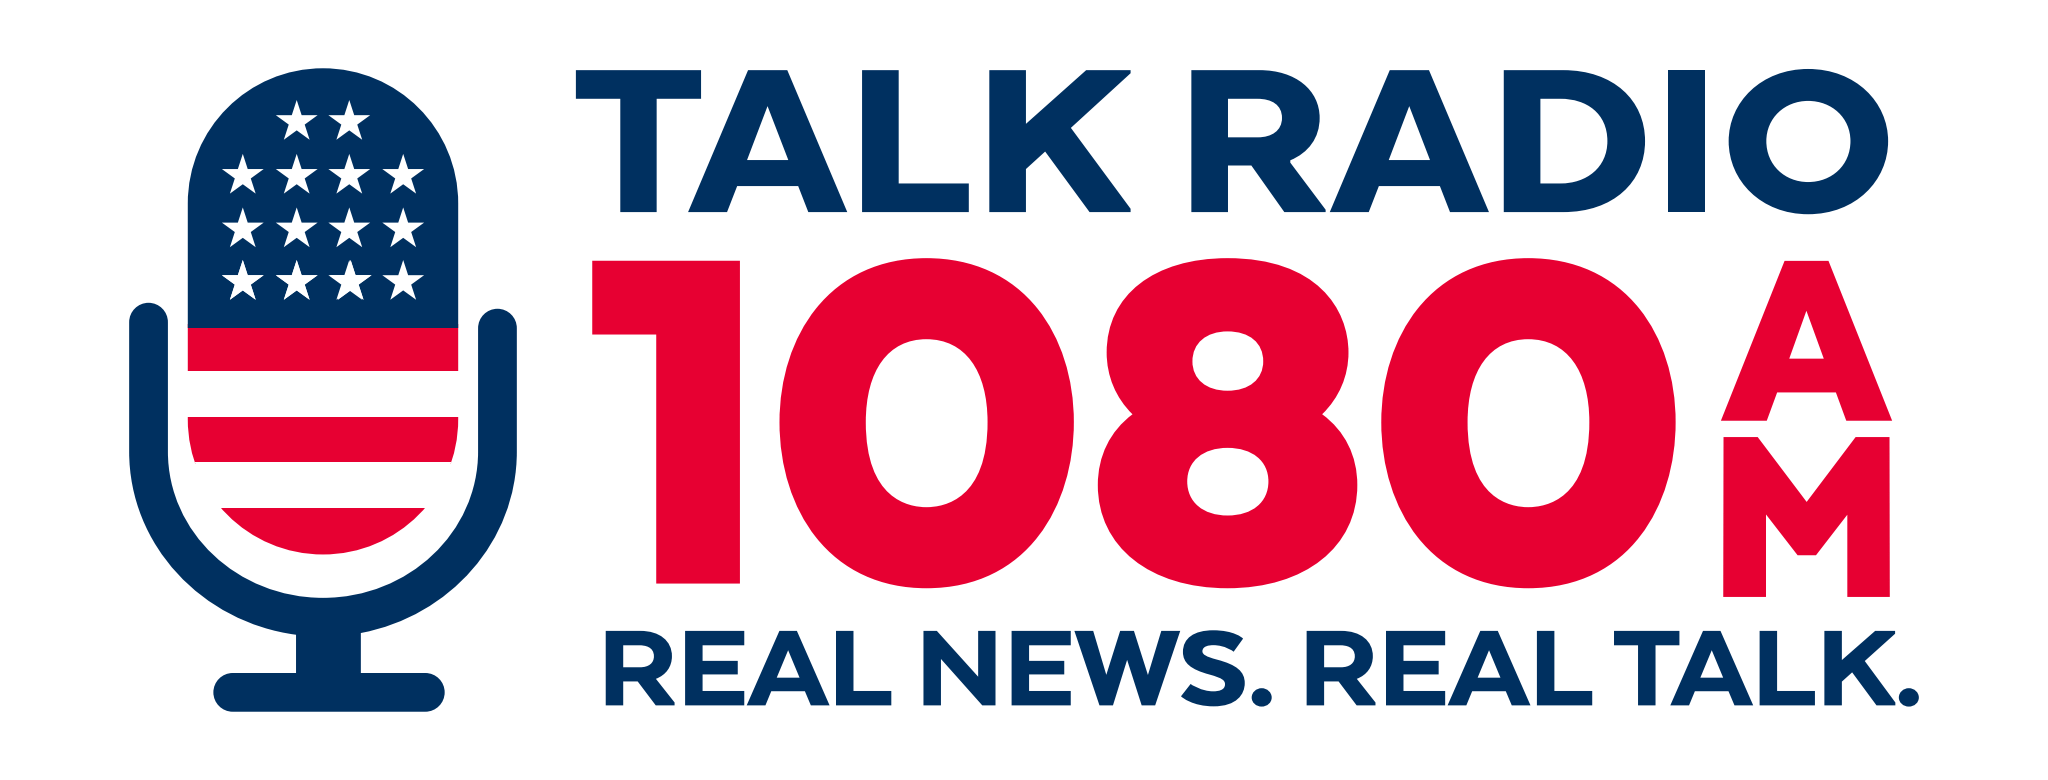 1080-logo